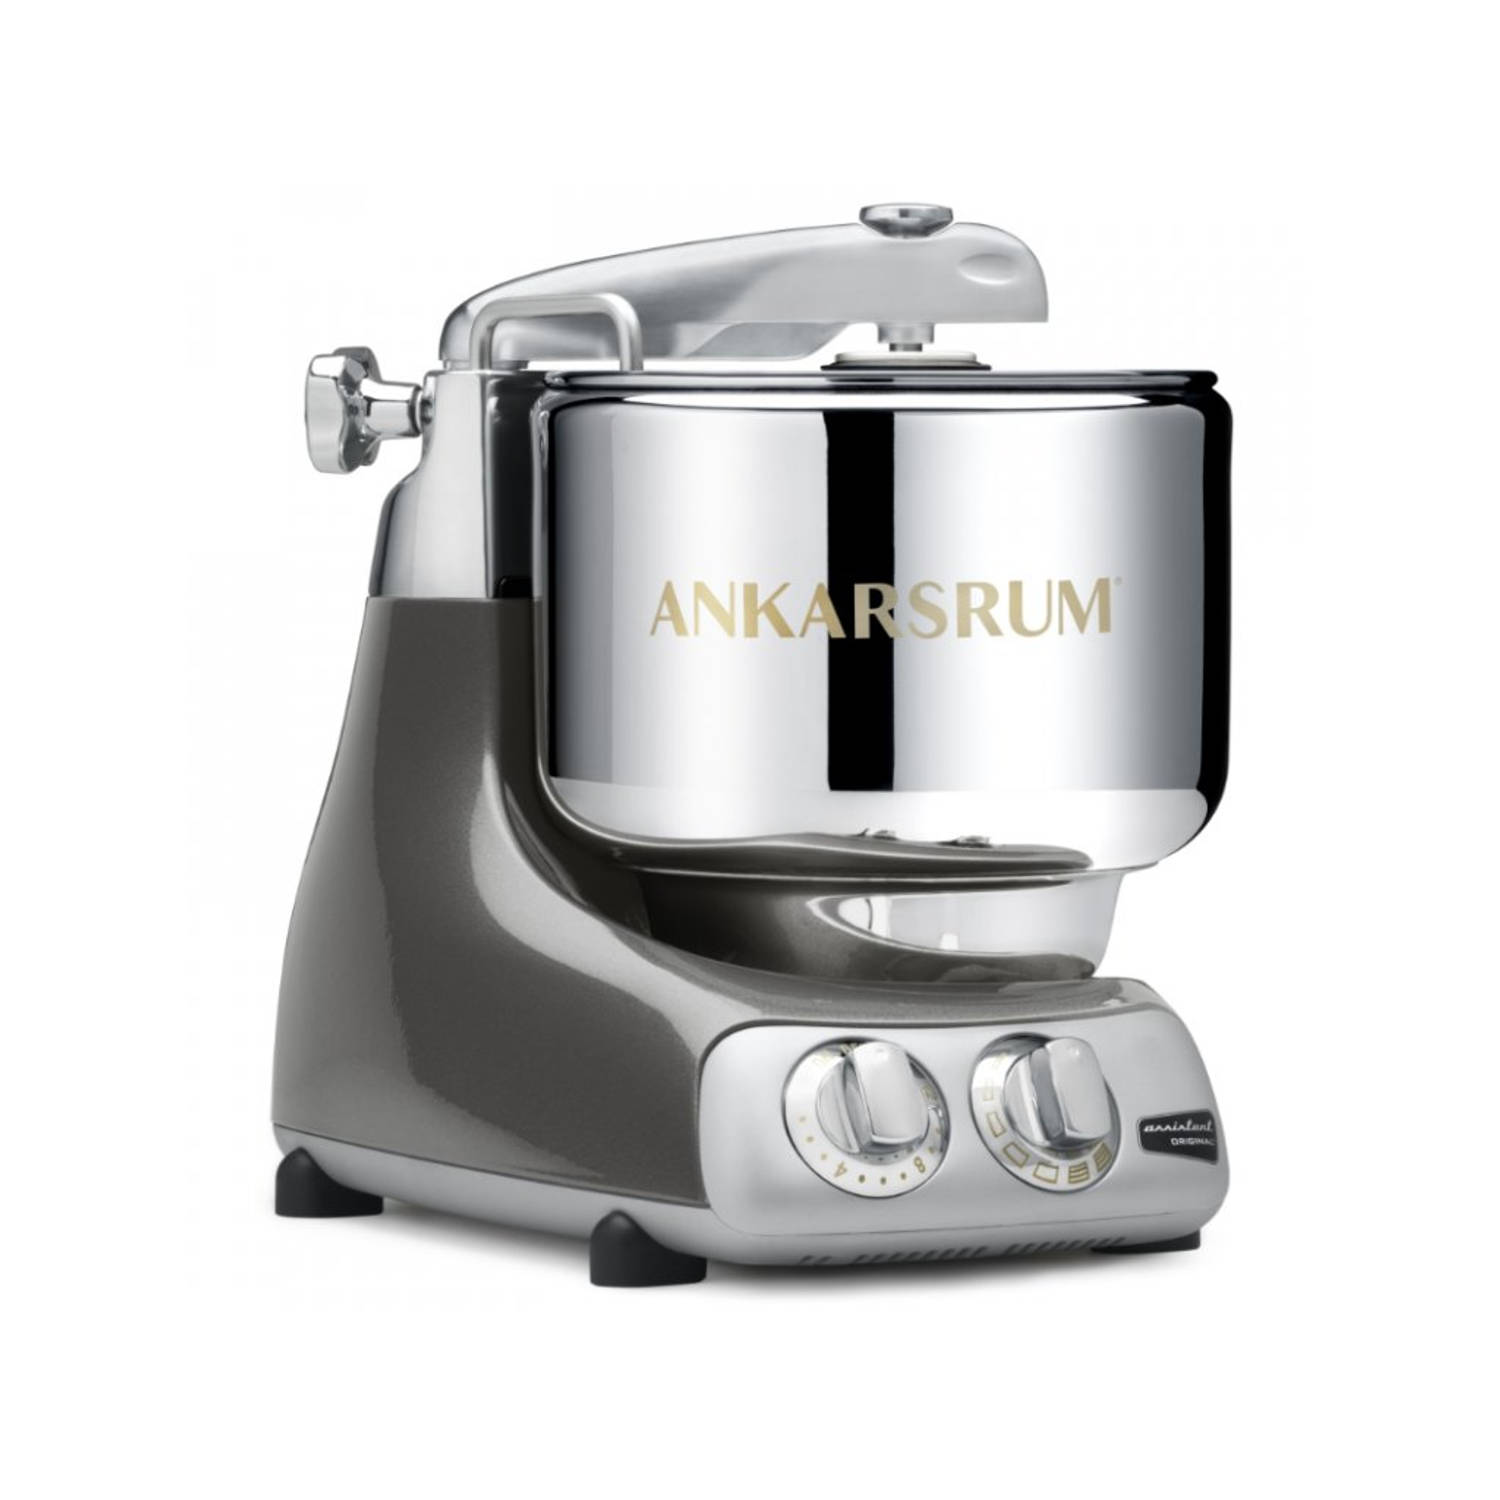 Ankarsrum Assistent Original AKR6230 keukenmachine - zwart/zilver - 7 L